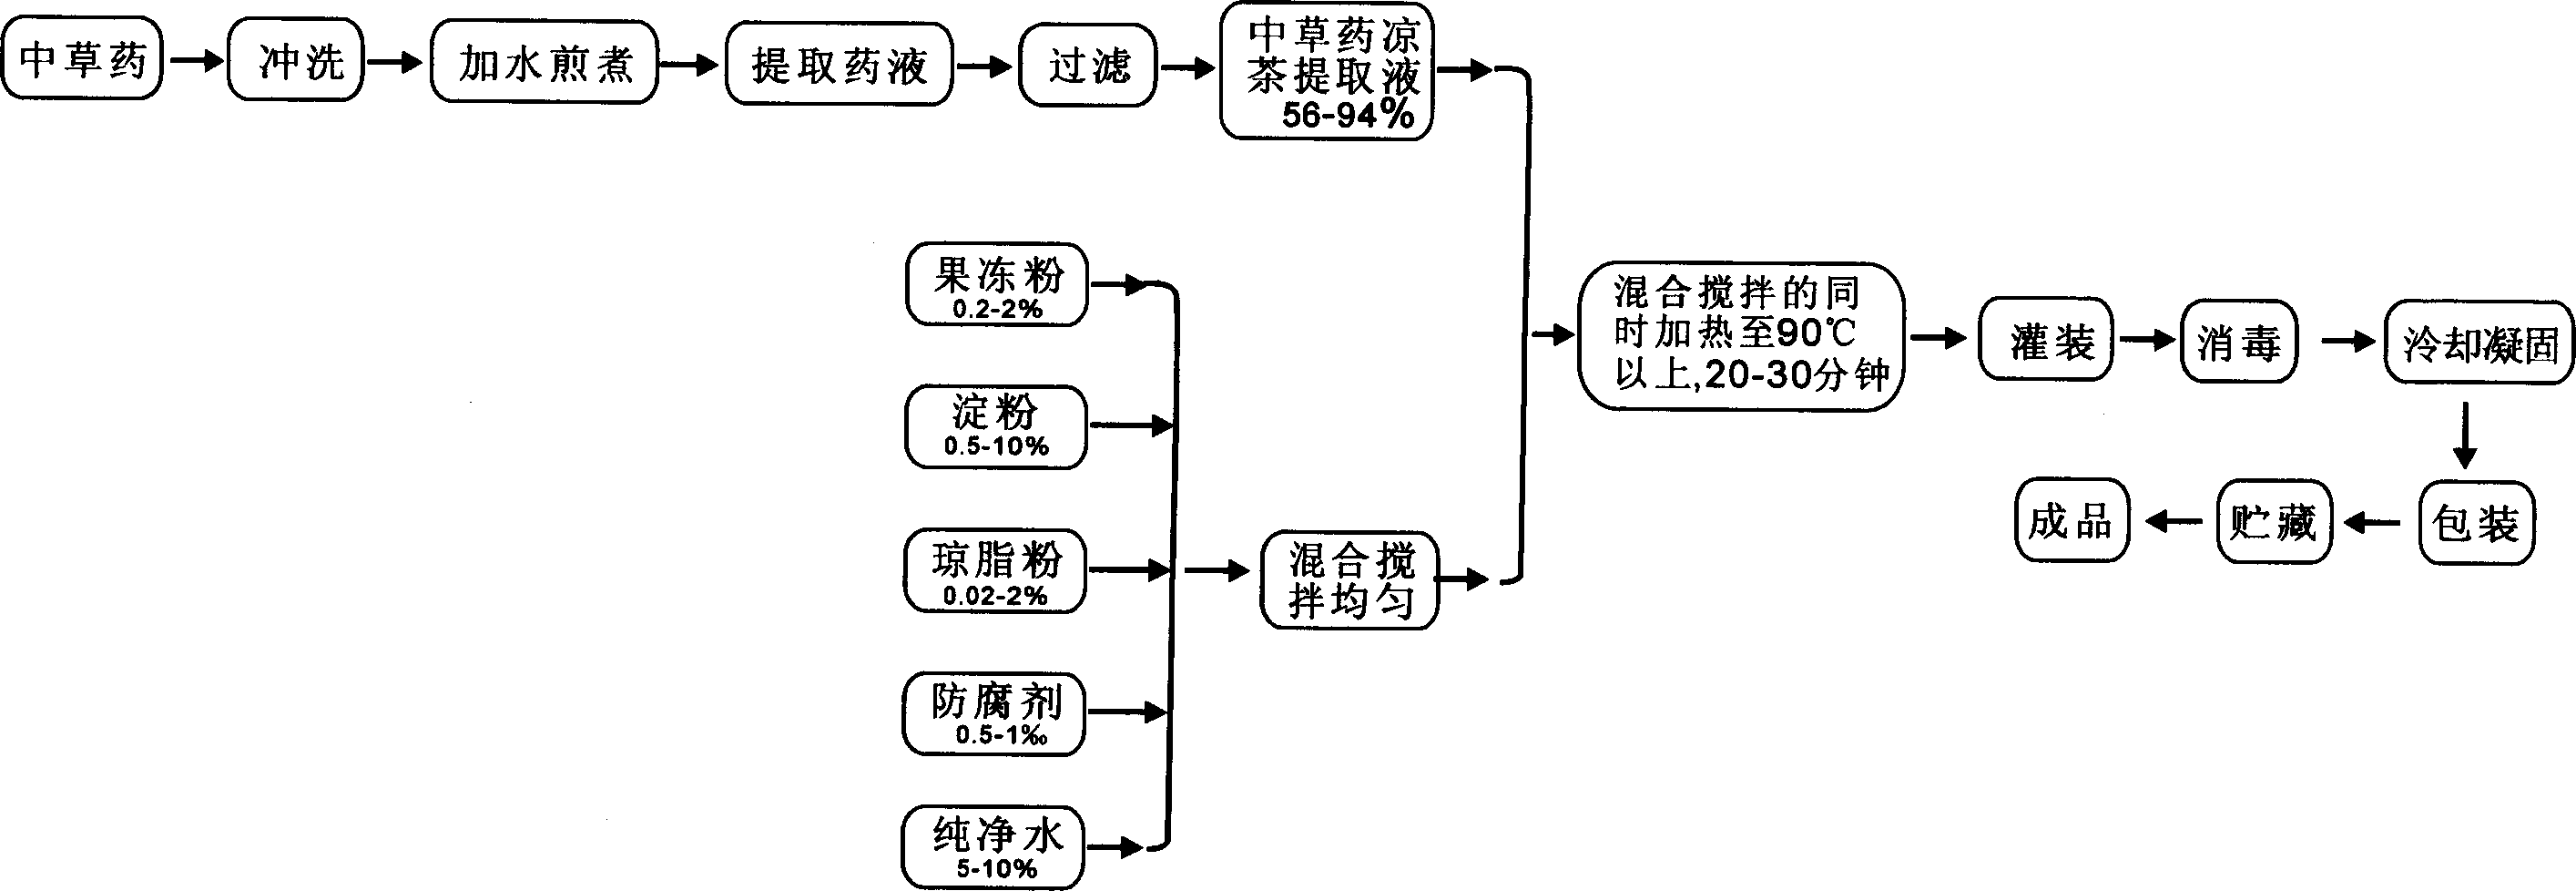 Process for preparing cold tea paste